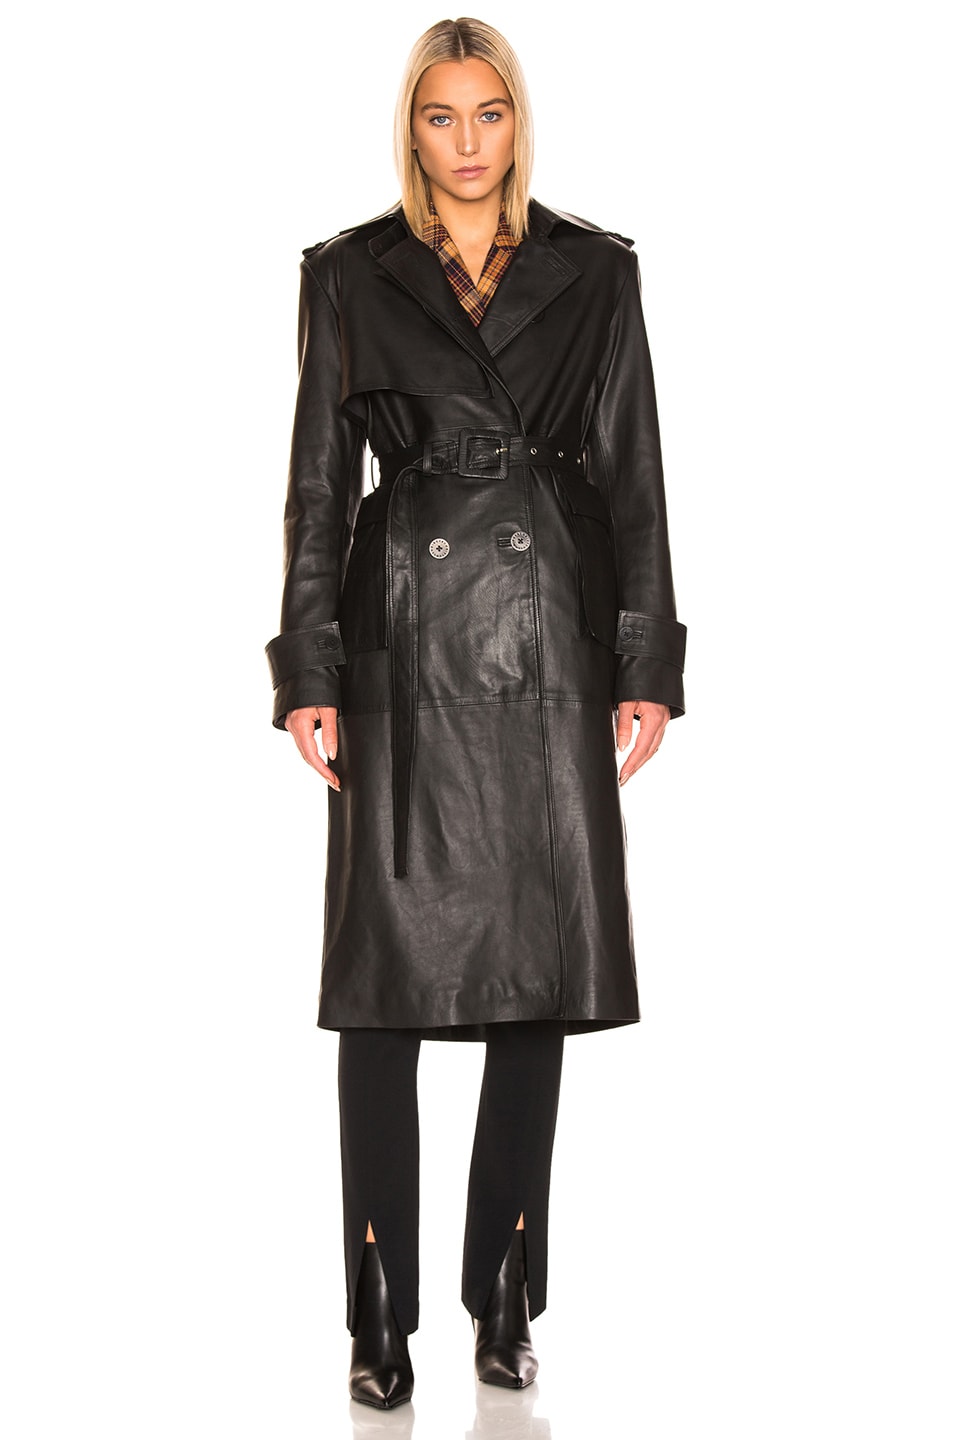 REMAIN Pirello Leather Trench Coat in Black | FWRD